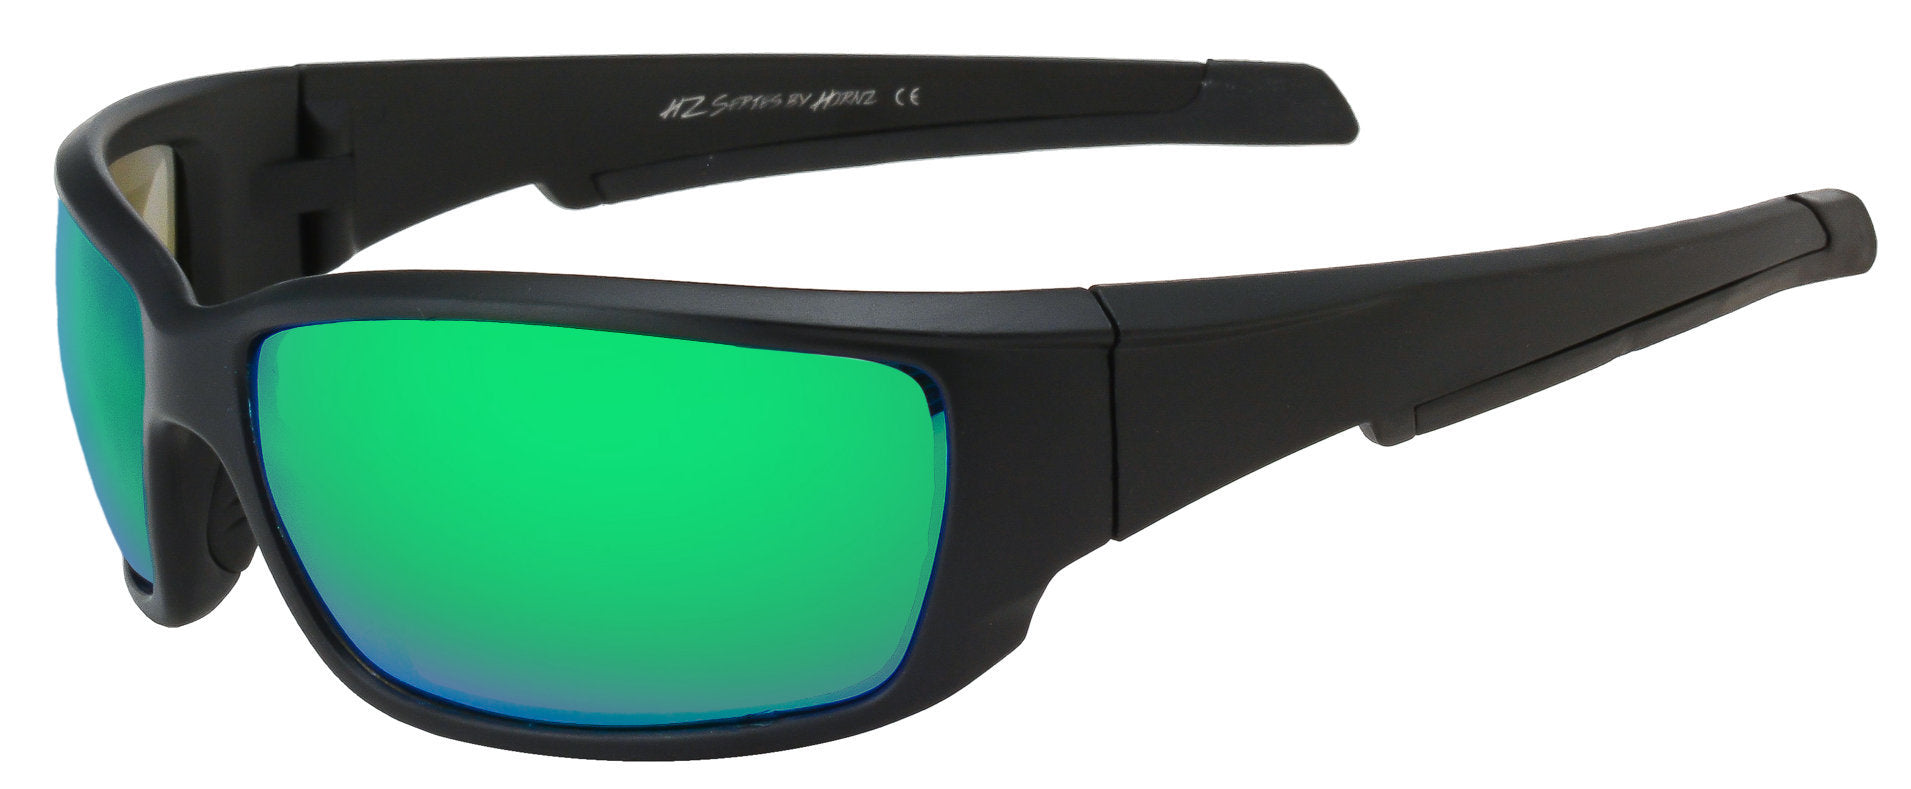 HZ Series Superfit - Premium Polarized Sunglasses Sunglasses for Men – Full  Frame Strong Arms